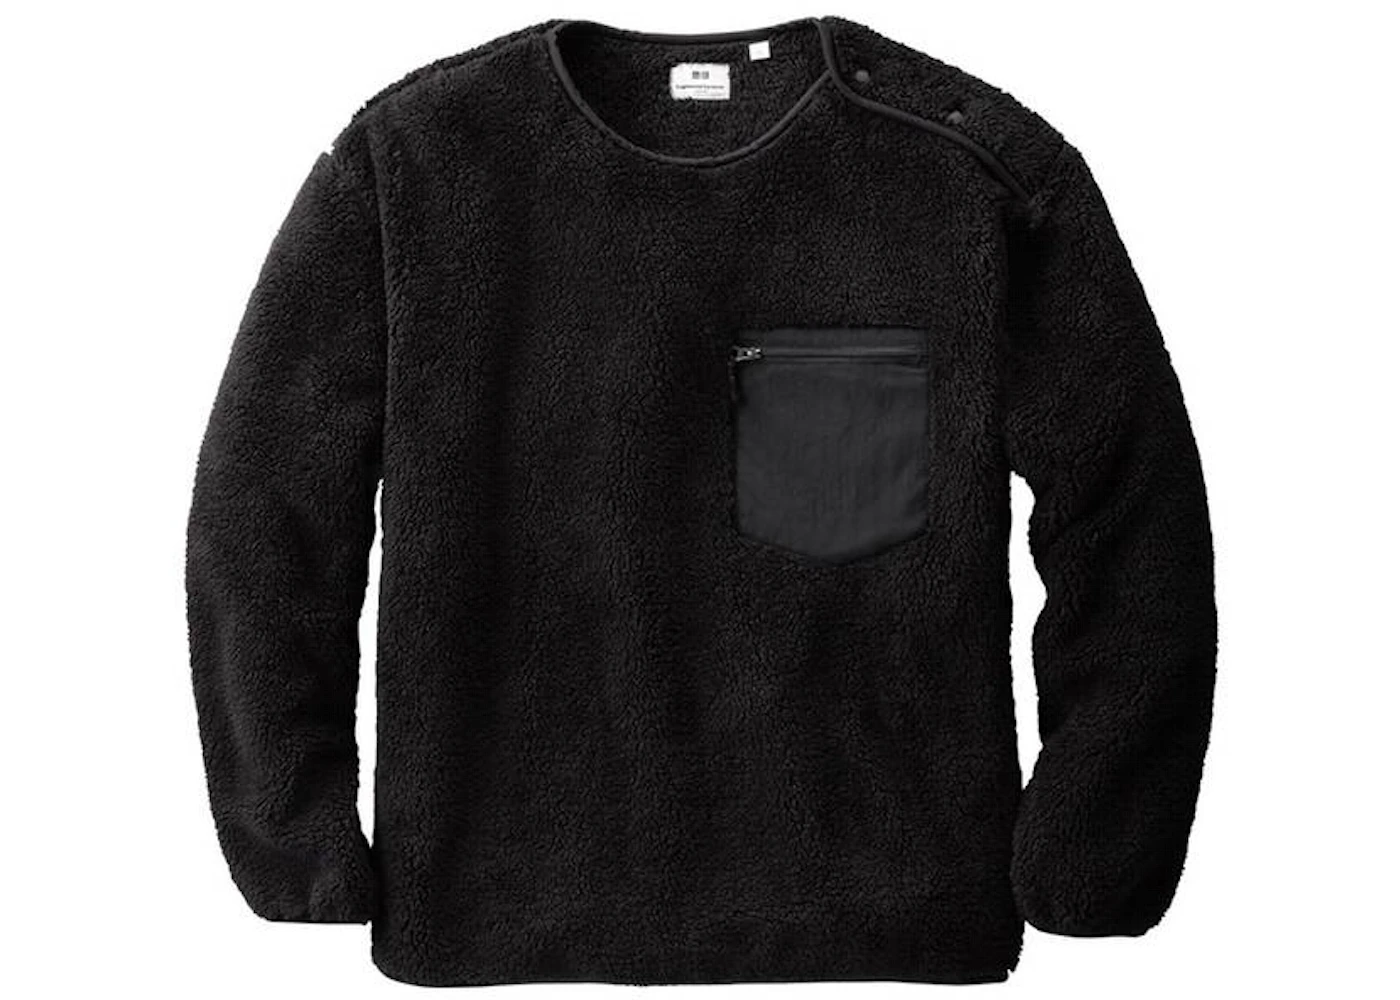 Uniqlo x Engineered Garments Fleece Pullover (US Sizing) Black